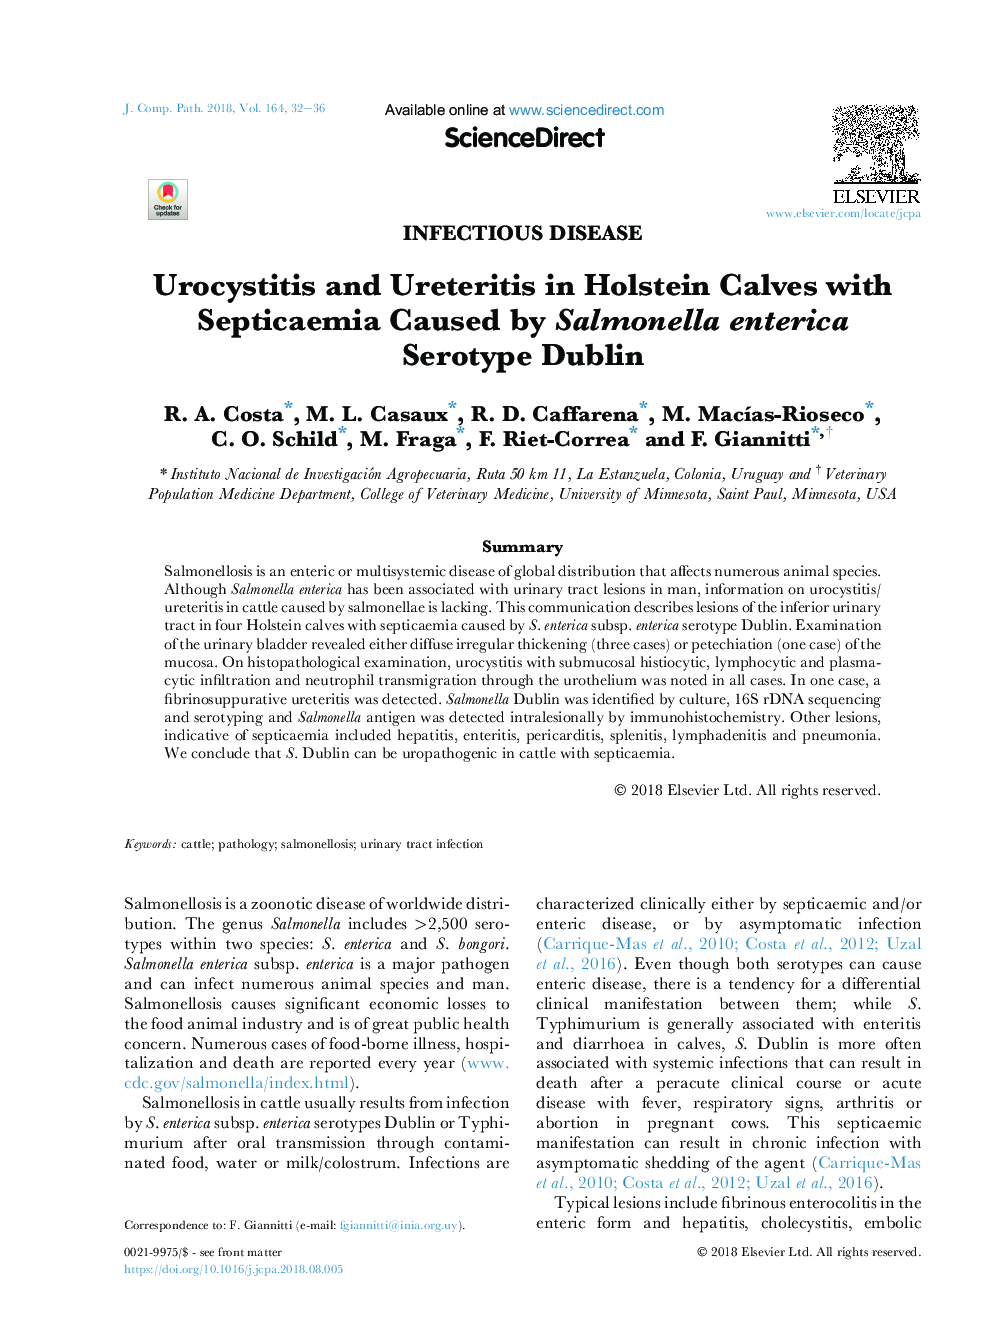 Urocystitis and Ureteritis in Holstein Calves with Septicaemia Caused by Salmonella enterica Serotype Dublin